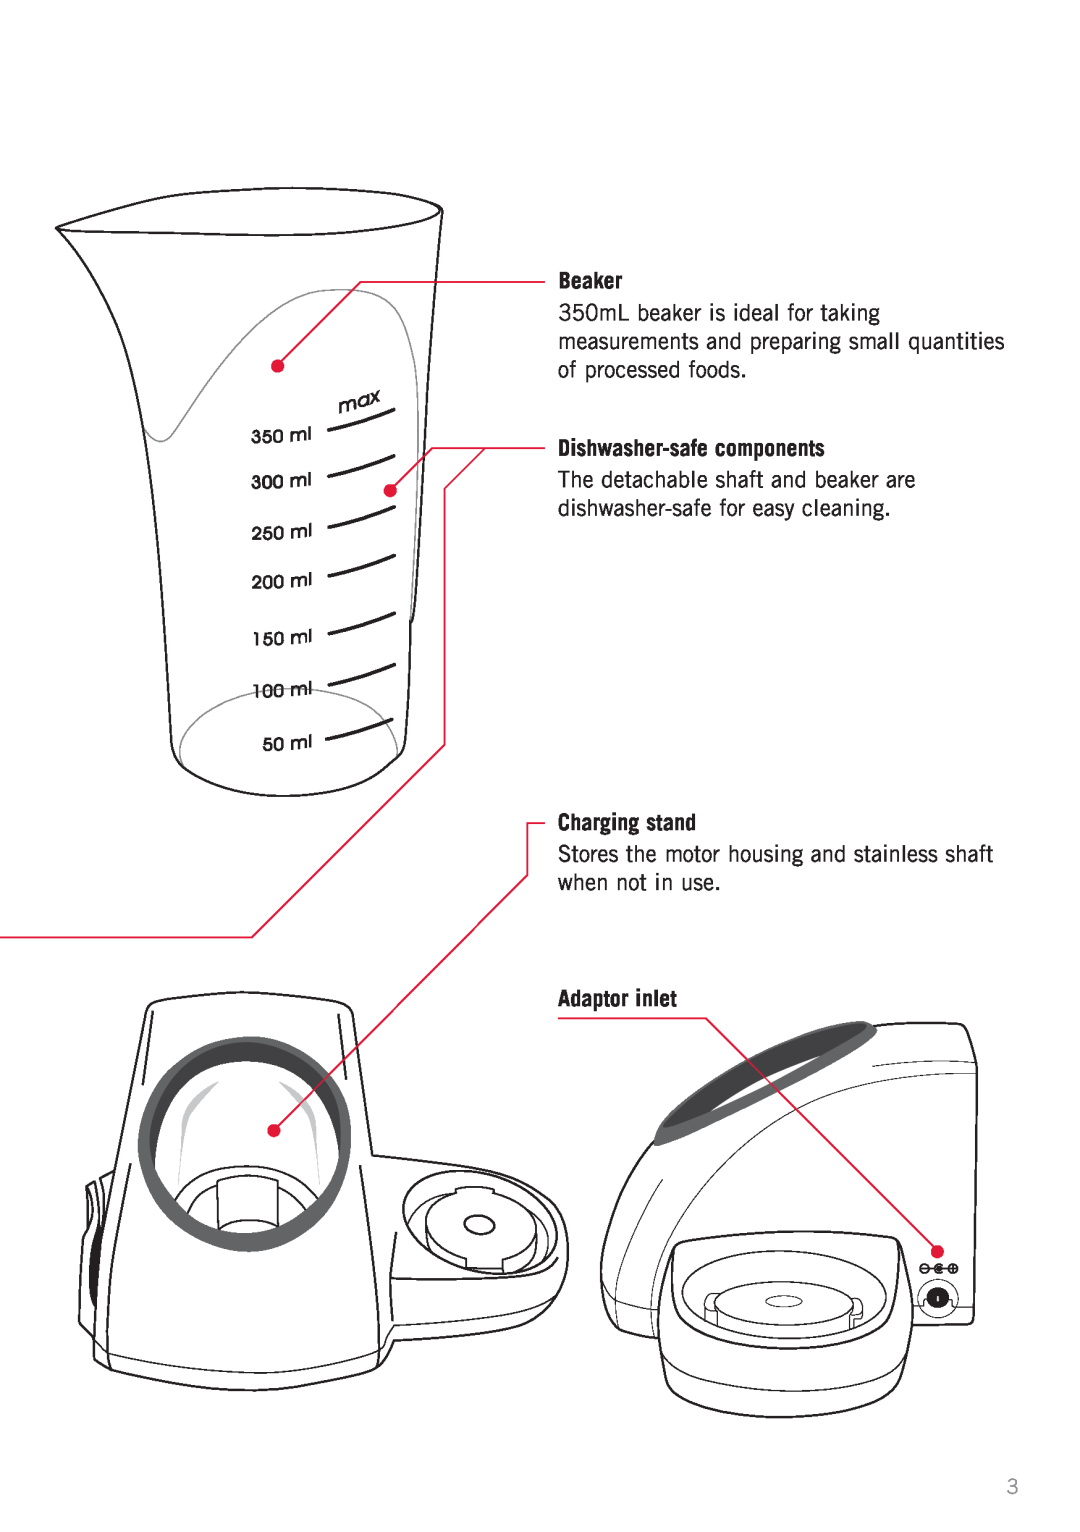 Sunbeam SM8700 manual Beaker, Dishwasher-safe components, Charging stand, Adaptor inlet 